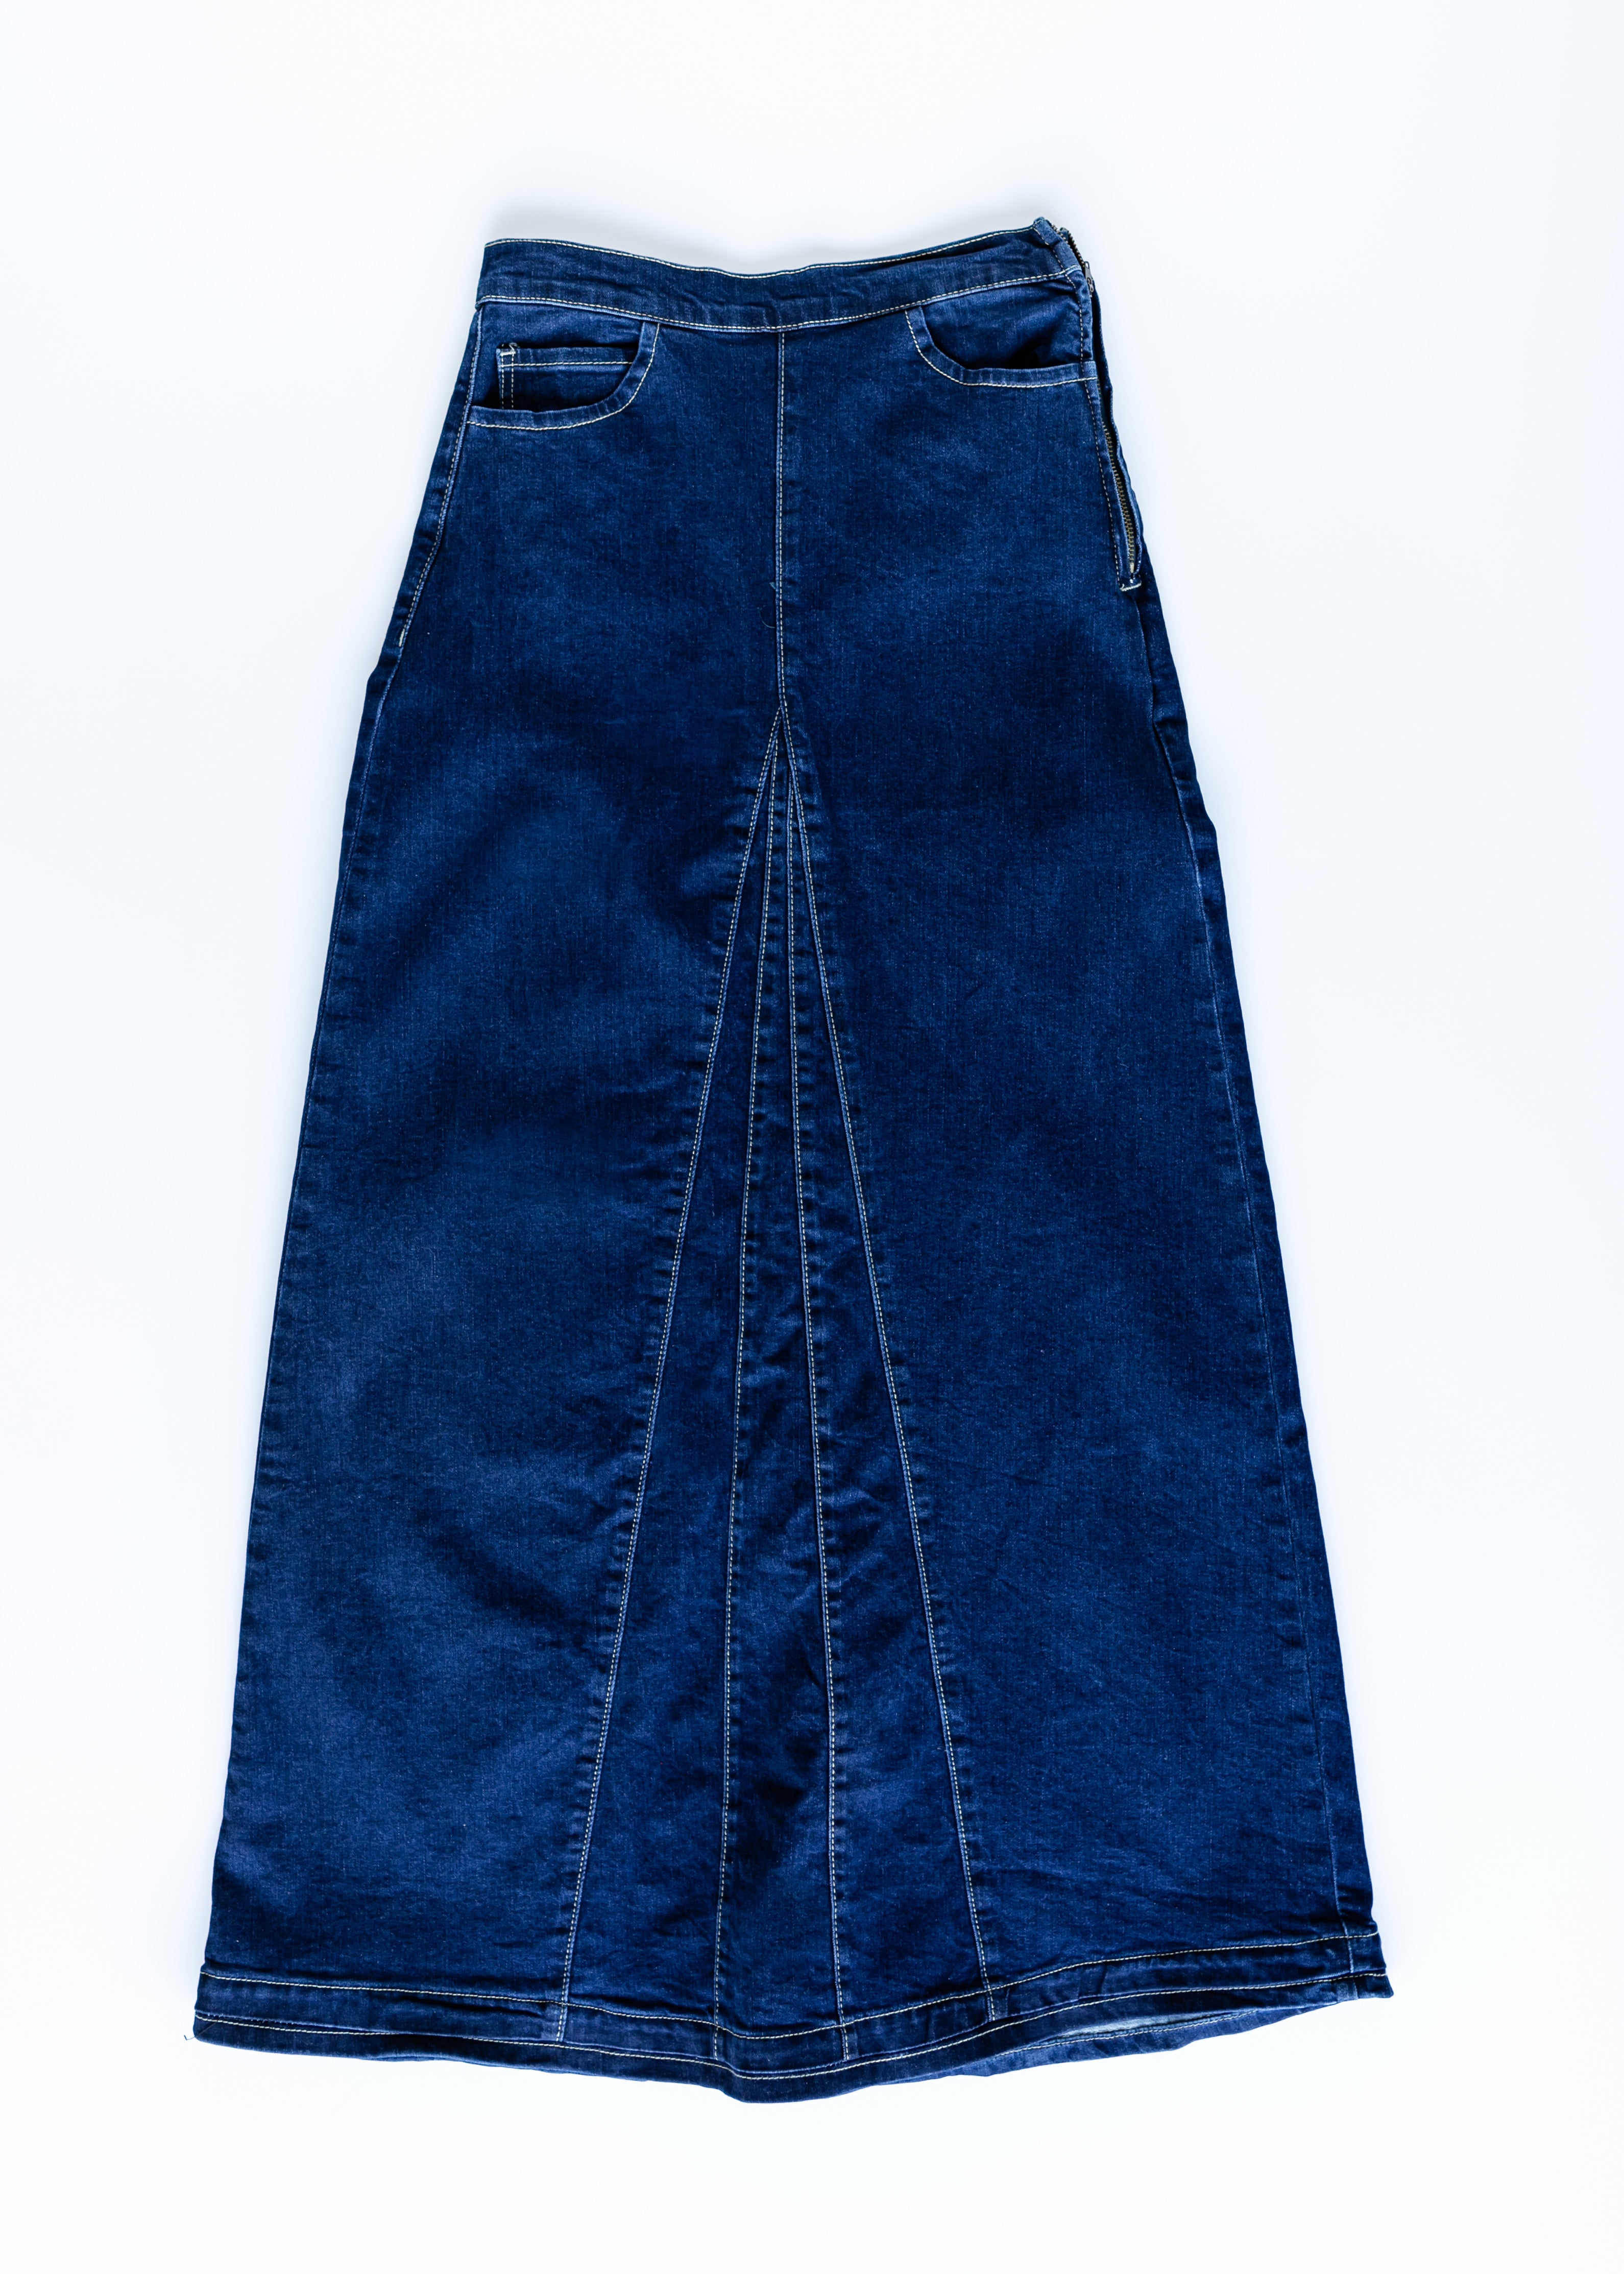 Buy Yayun Women's Maxi Pencil Jean Skirt High Waisted A-Line Long Denim  Skirts Jean Skirt 1 L at Amazon.in